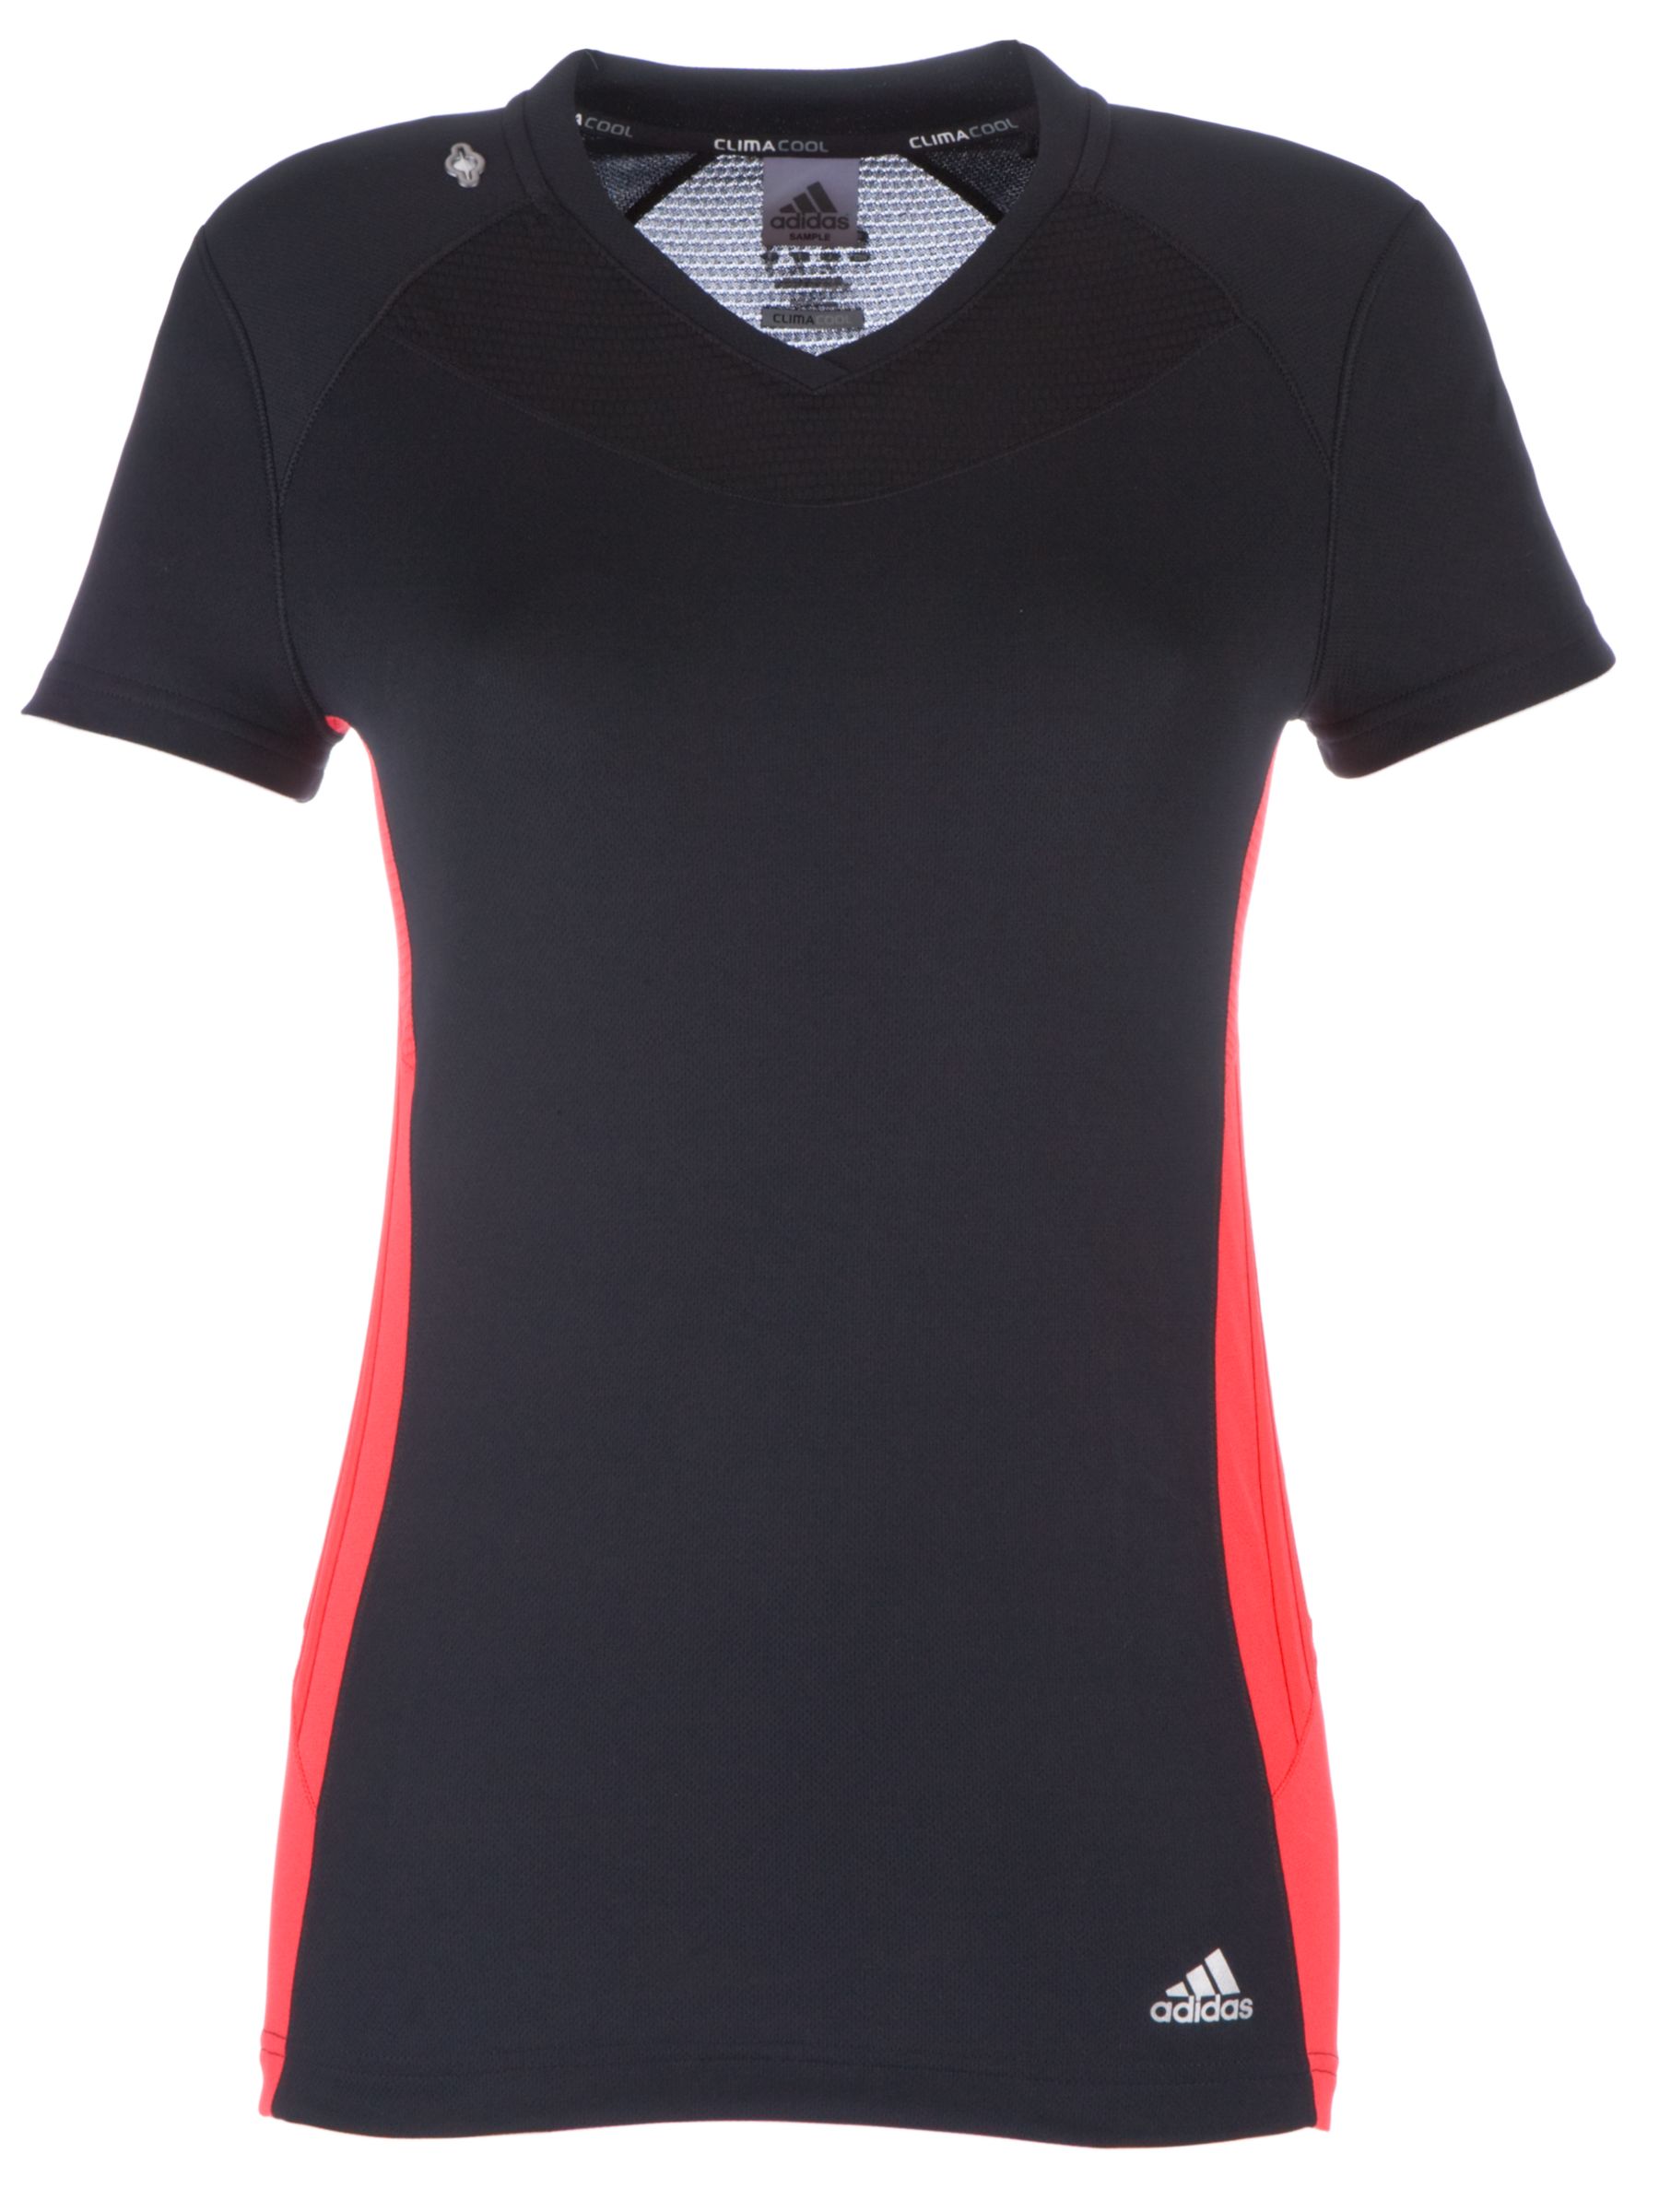 Adidas Supernova Short Sleeve T-Shirt, Black/Red